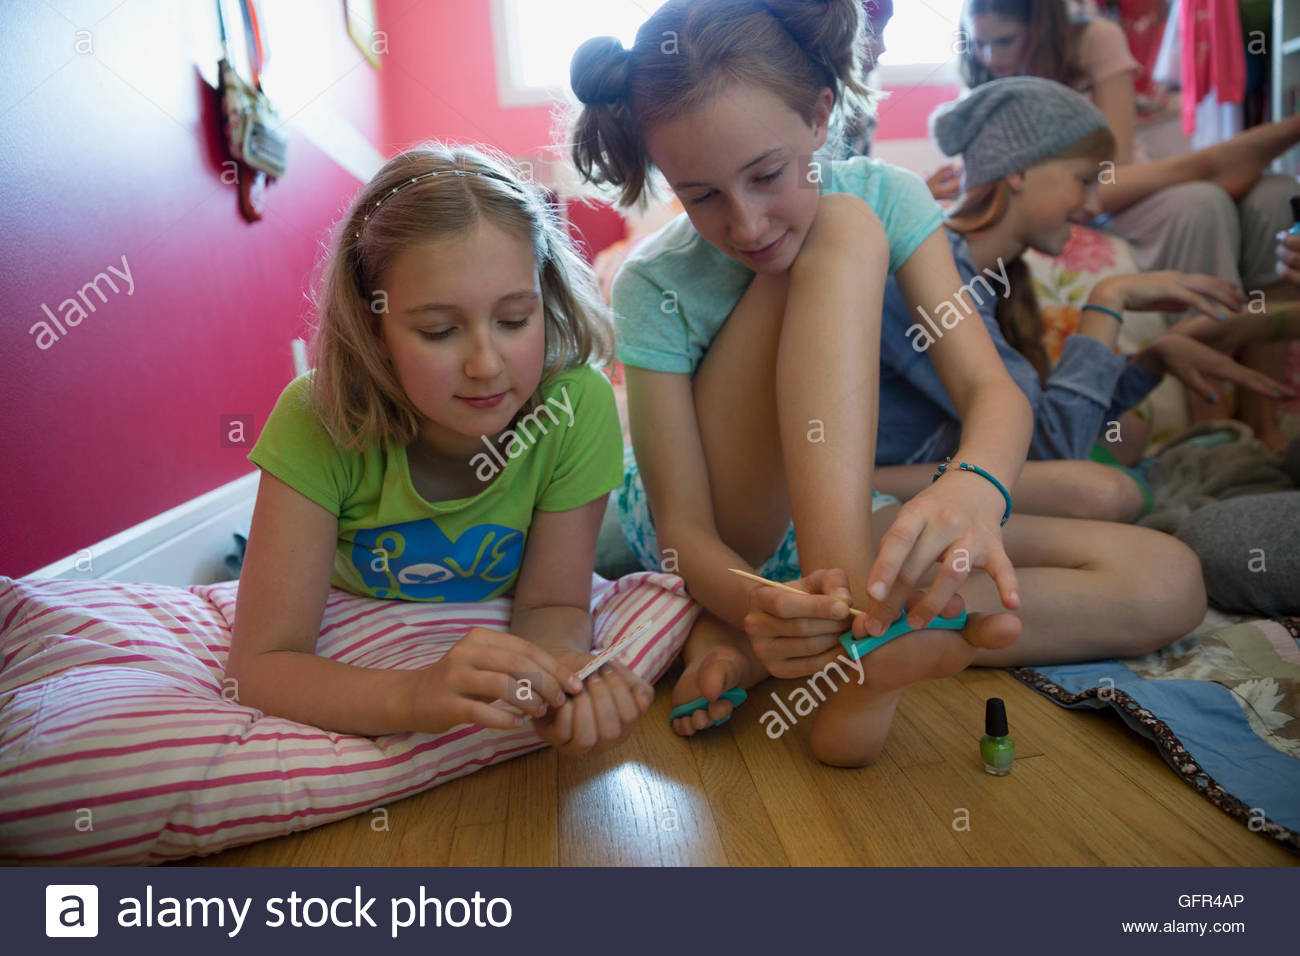 Girls filing and painting nails at slumber party Stock Photo